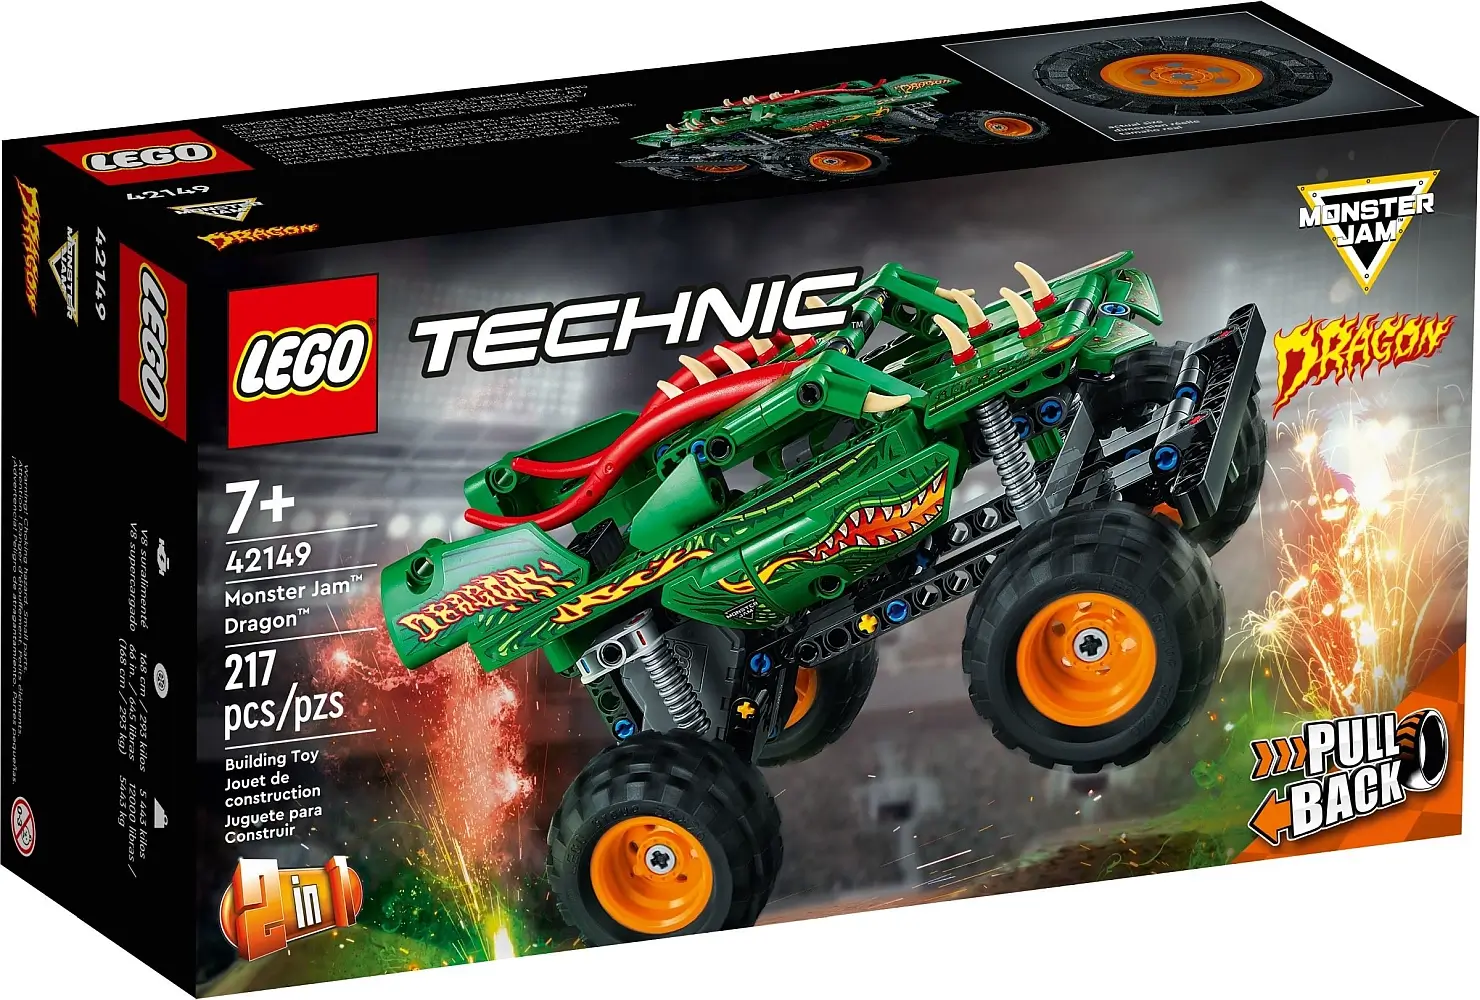 Pudełko zestawu 42149 z serii LEGO® Technic™ – Monster Jam™ Dragon™